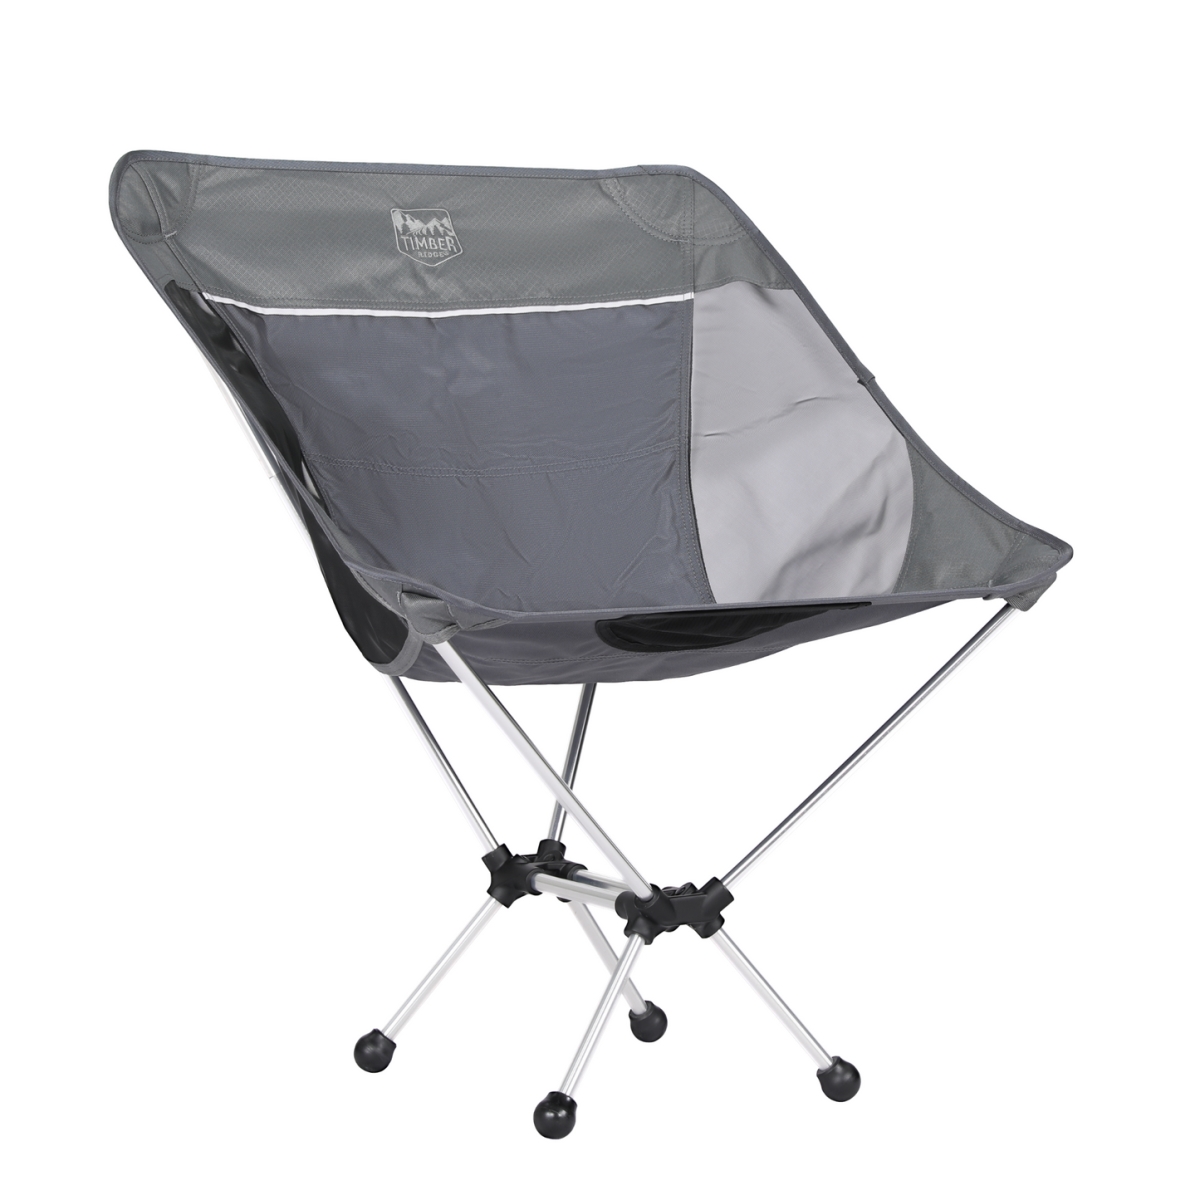 Westfield Outdoor FC-339L Timber Ridge XL Lightweight Backpacking Chair